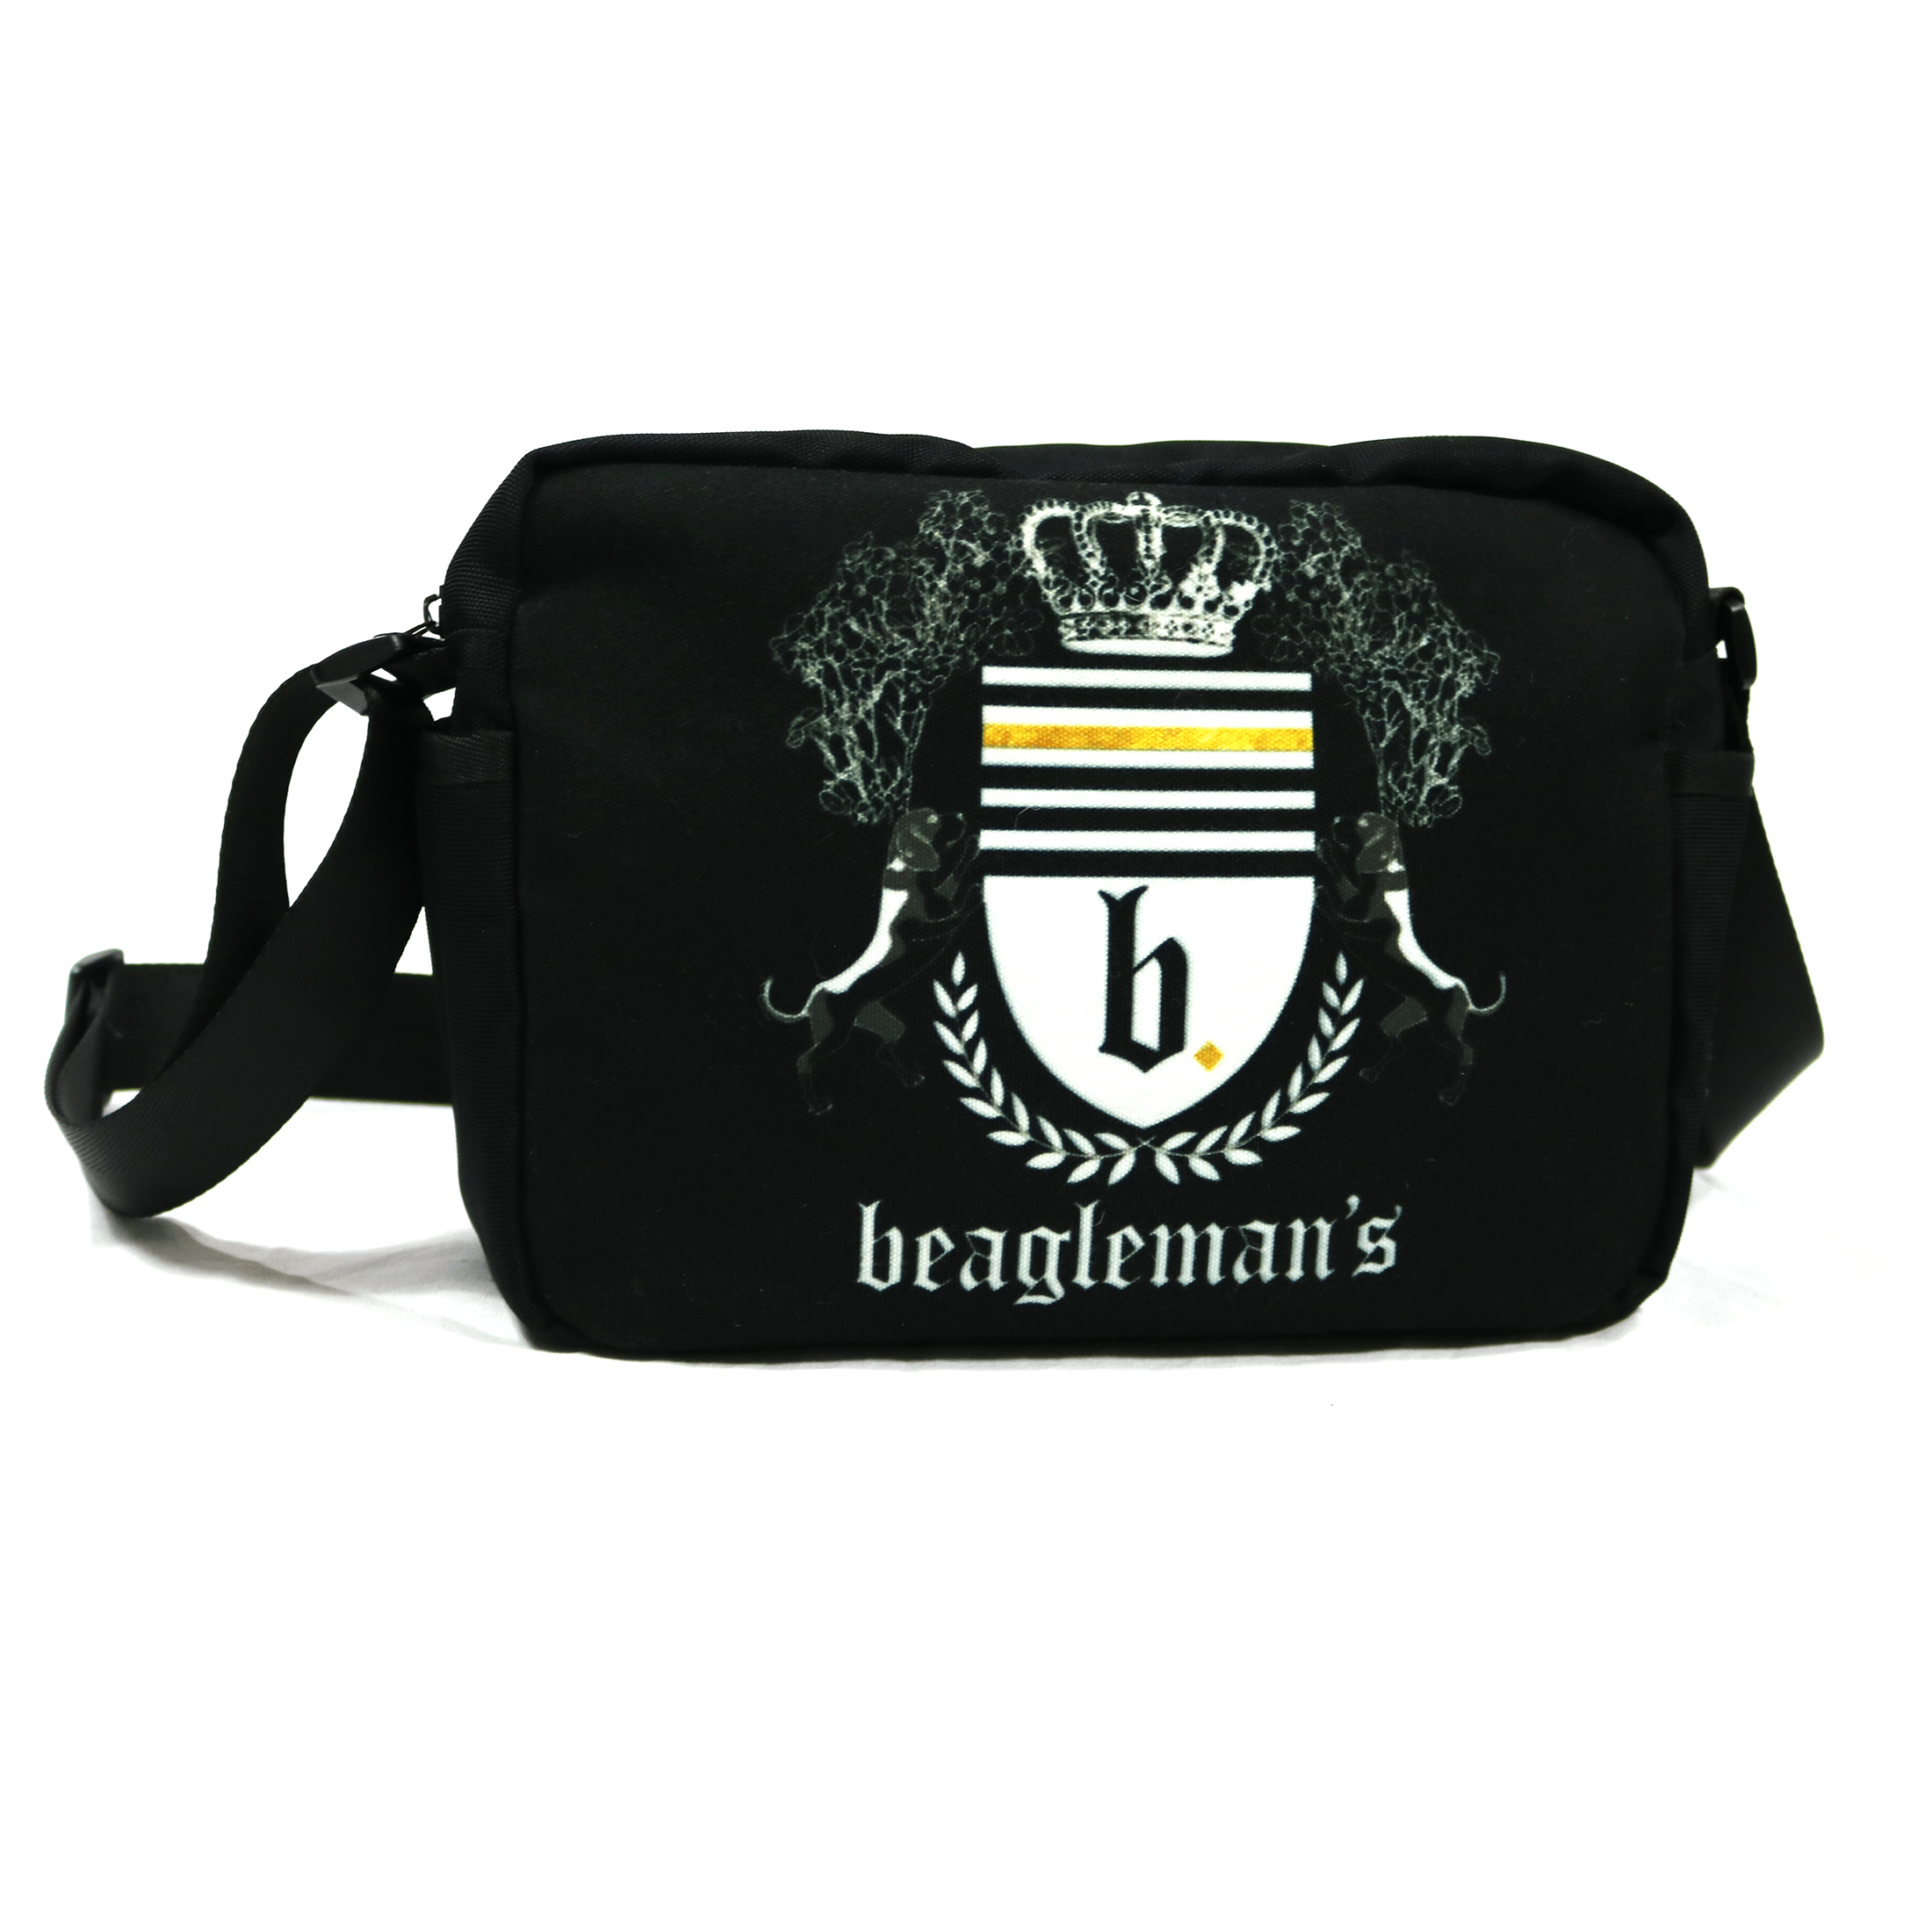 The Crest Traveler Bag